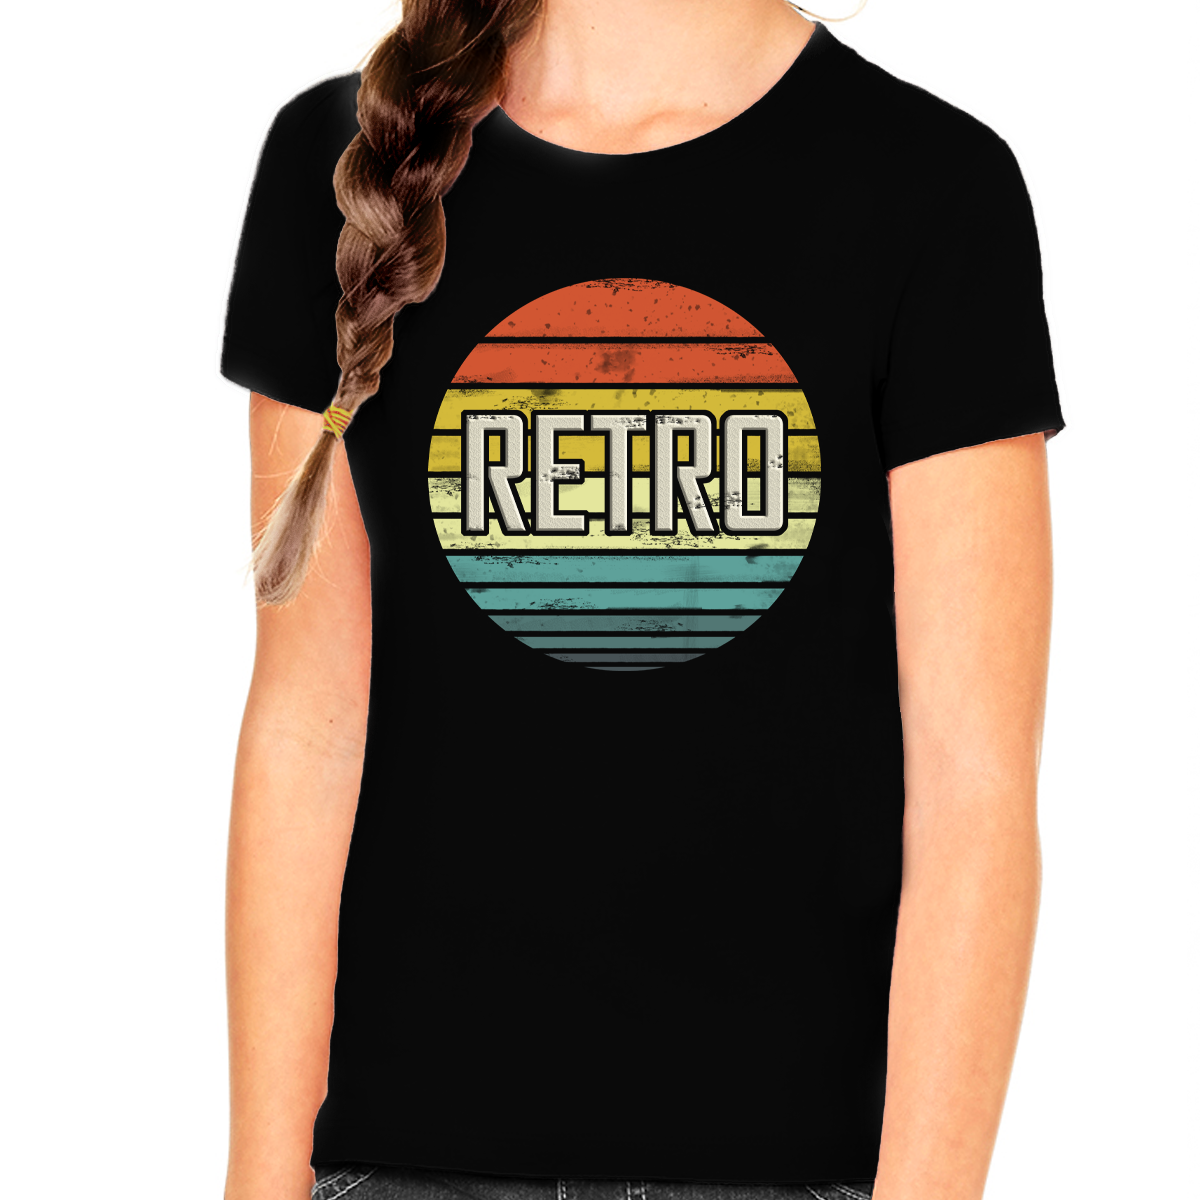 Retro Vintage Tees for Girls Retro Clothes Vintage T Shirts Retro Shirts for Girls Graphic Tees Vintage - Fire Fit Designs